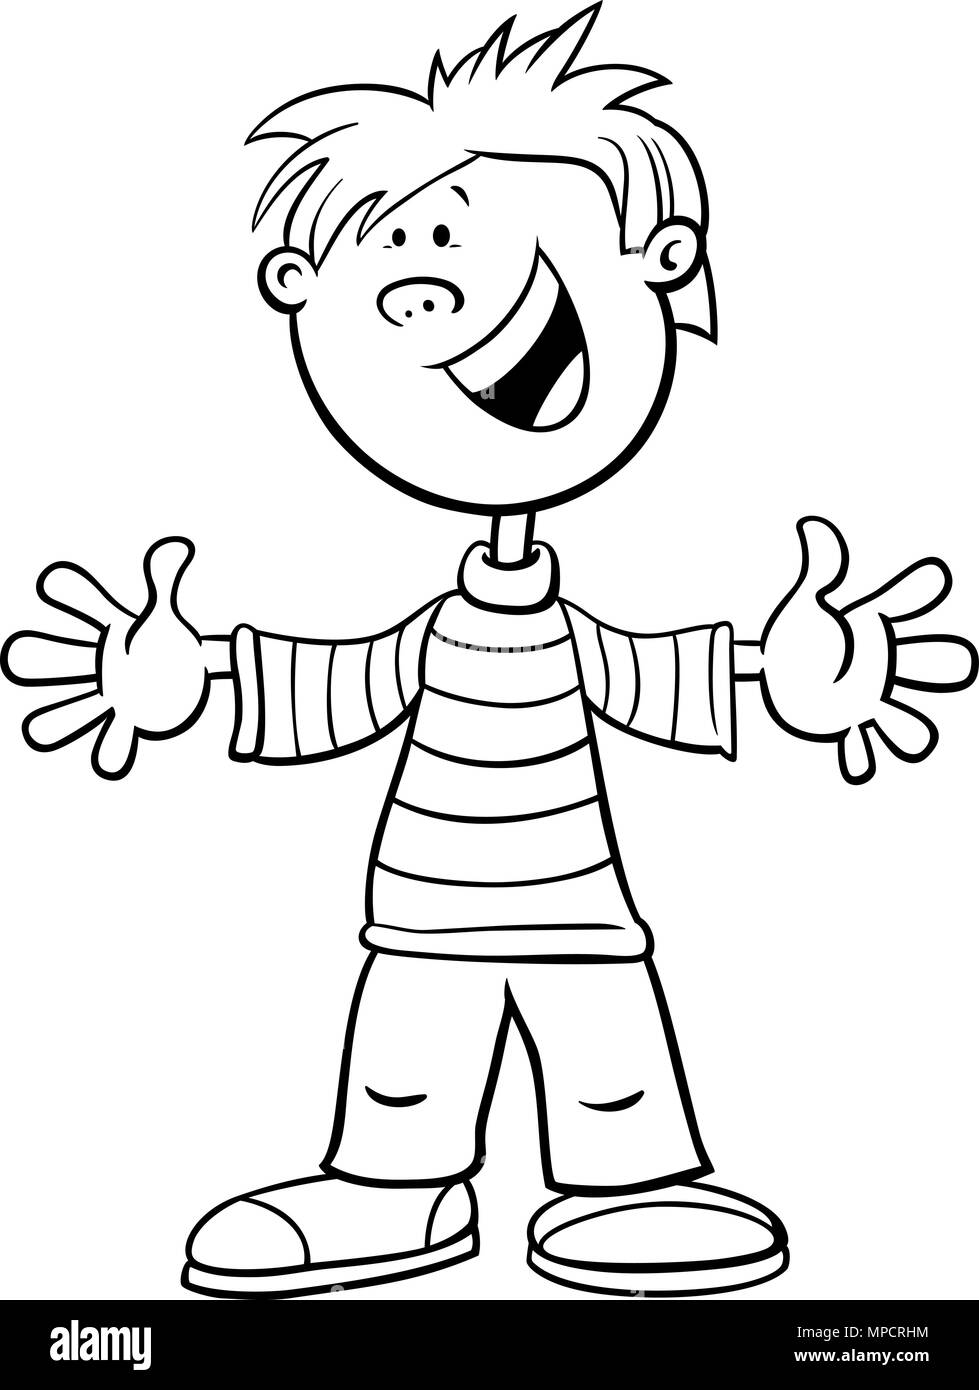 Black and White Cartoon Illustration of Elementary School Age Kid ...